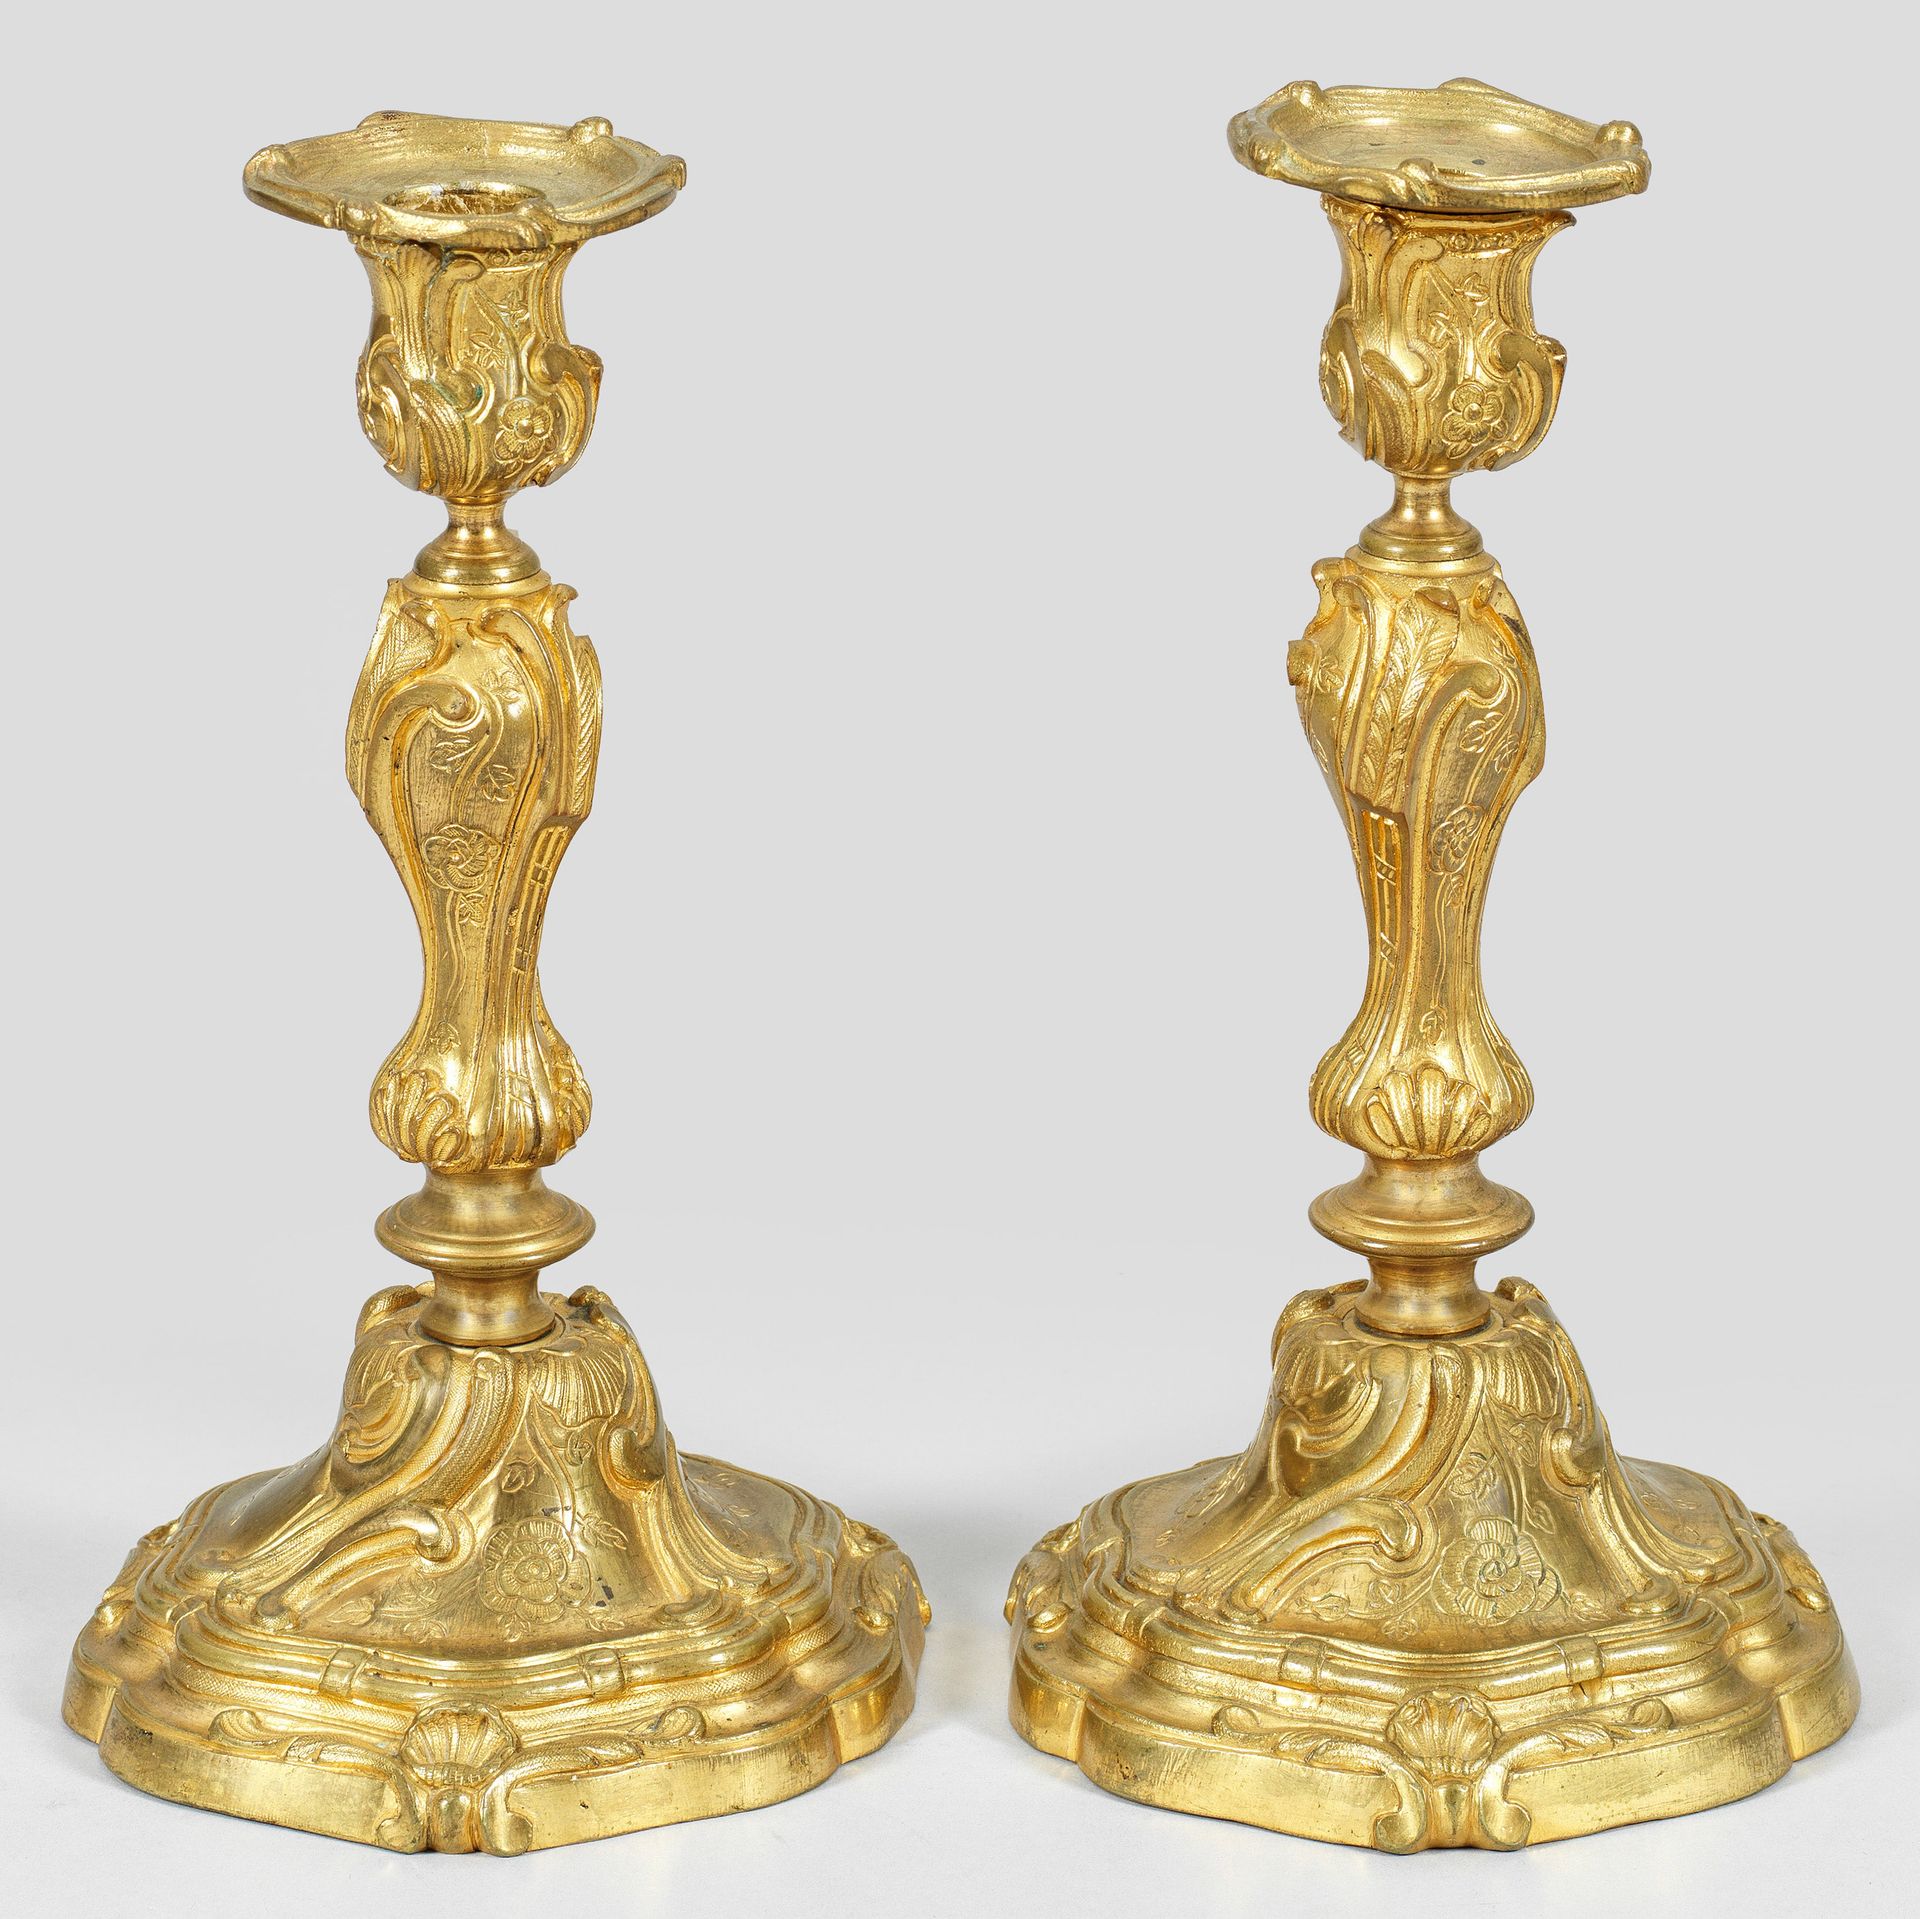 Null 一对路易十五风格的烛台，单灯；镀金青铜。相应的栏杆支撑着花瓶形的壶嘴，壶嘴上方是与之相匹配的弧形底座，底座上模制有凸起的涡形浮雕。高 26 厘米。
一&hellip;